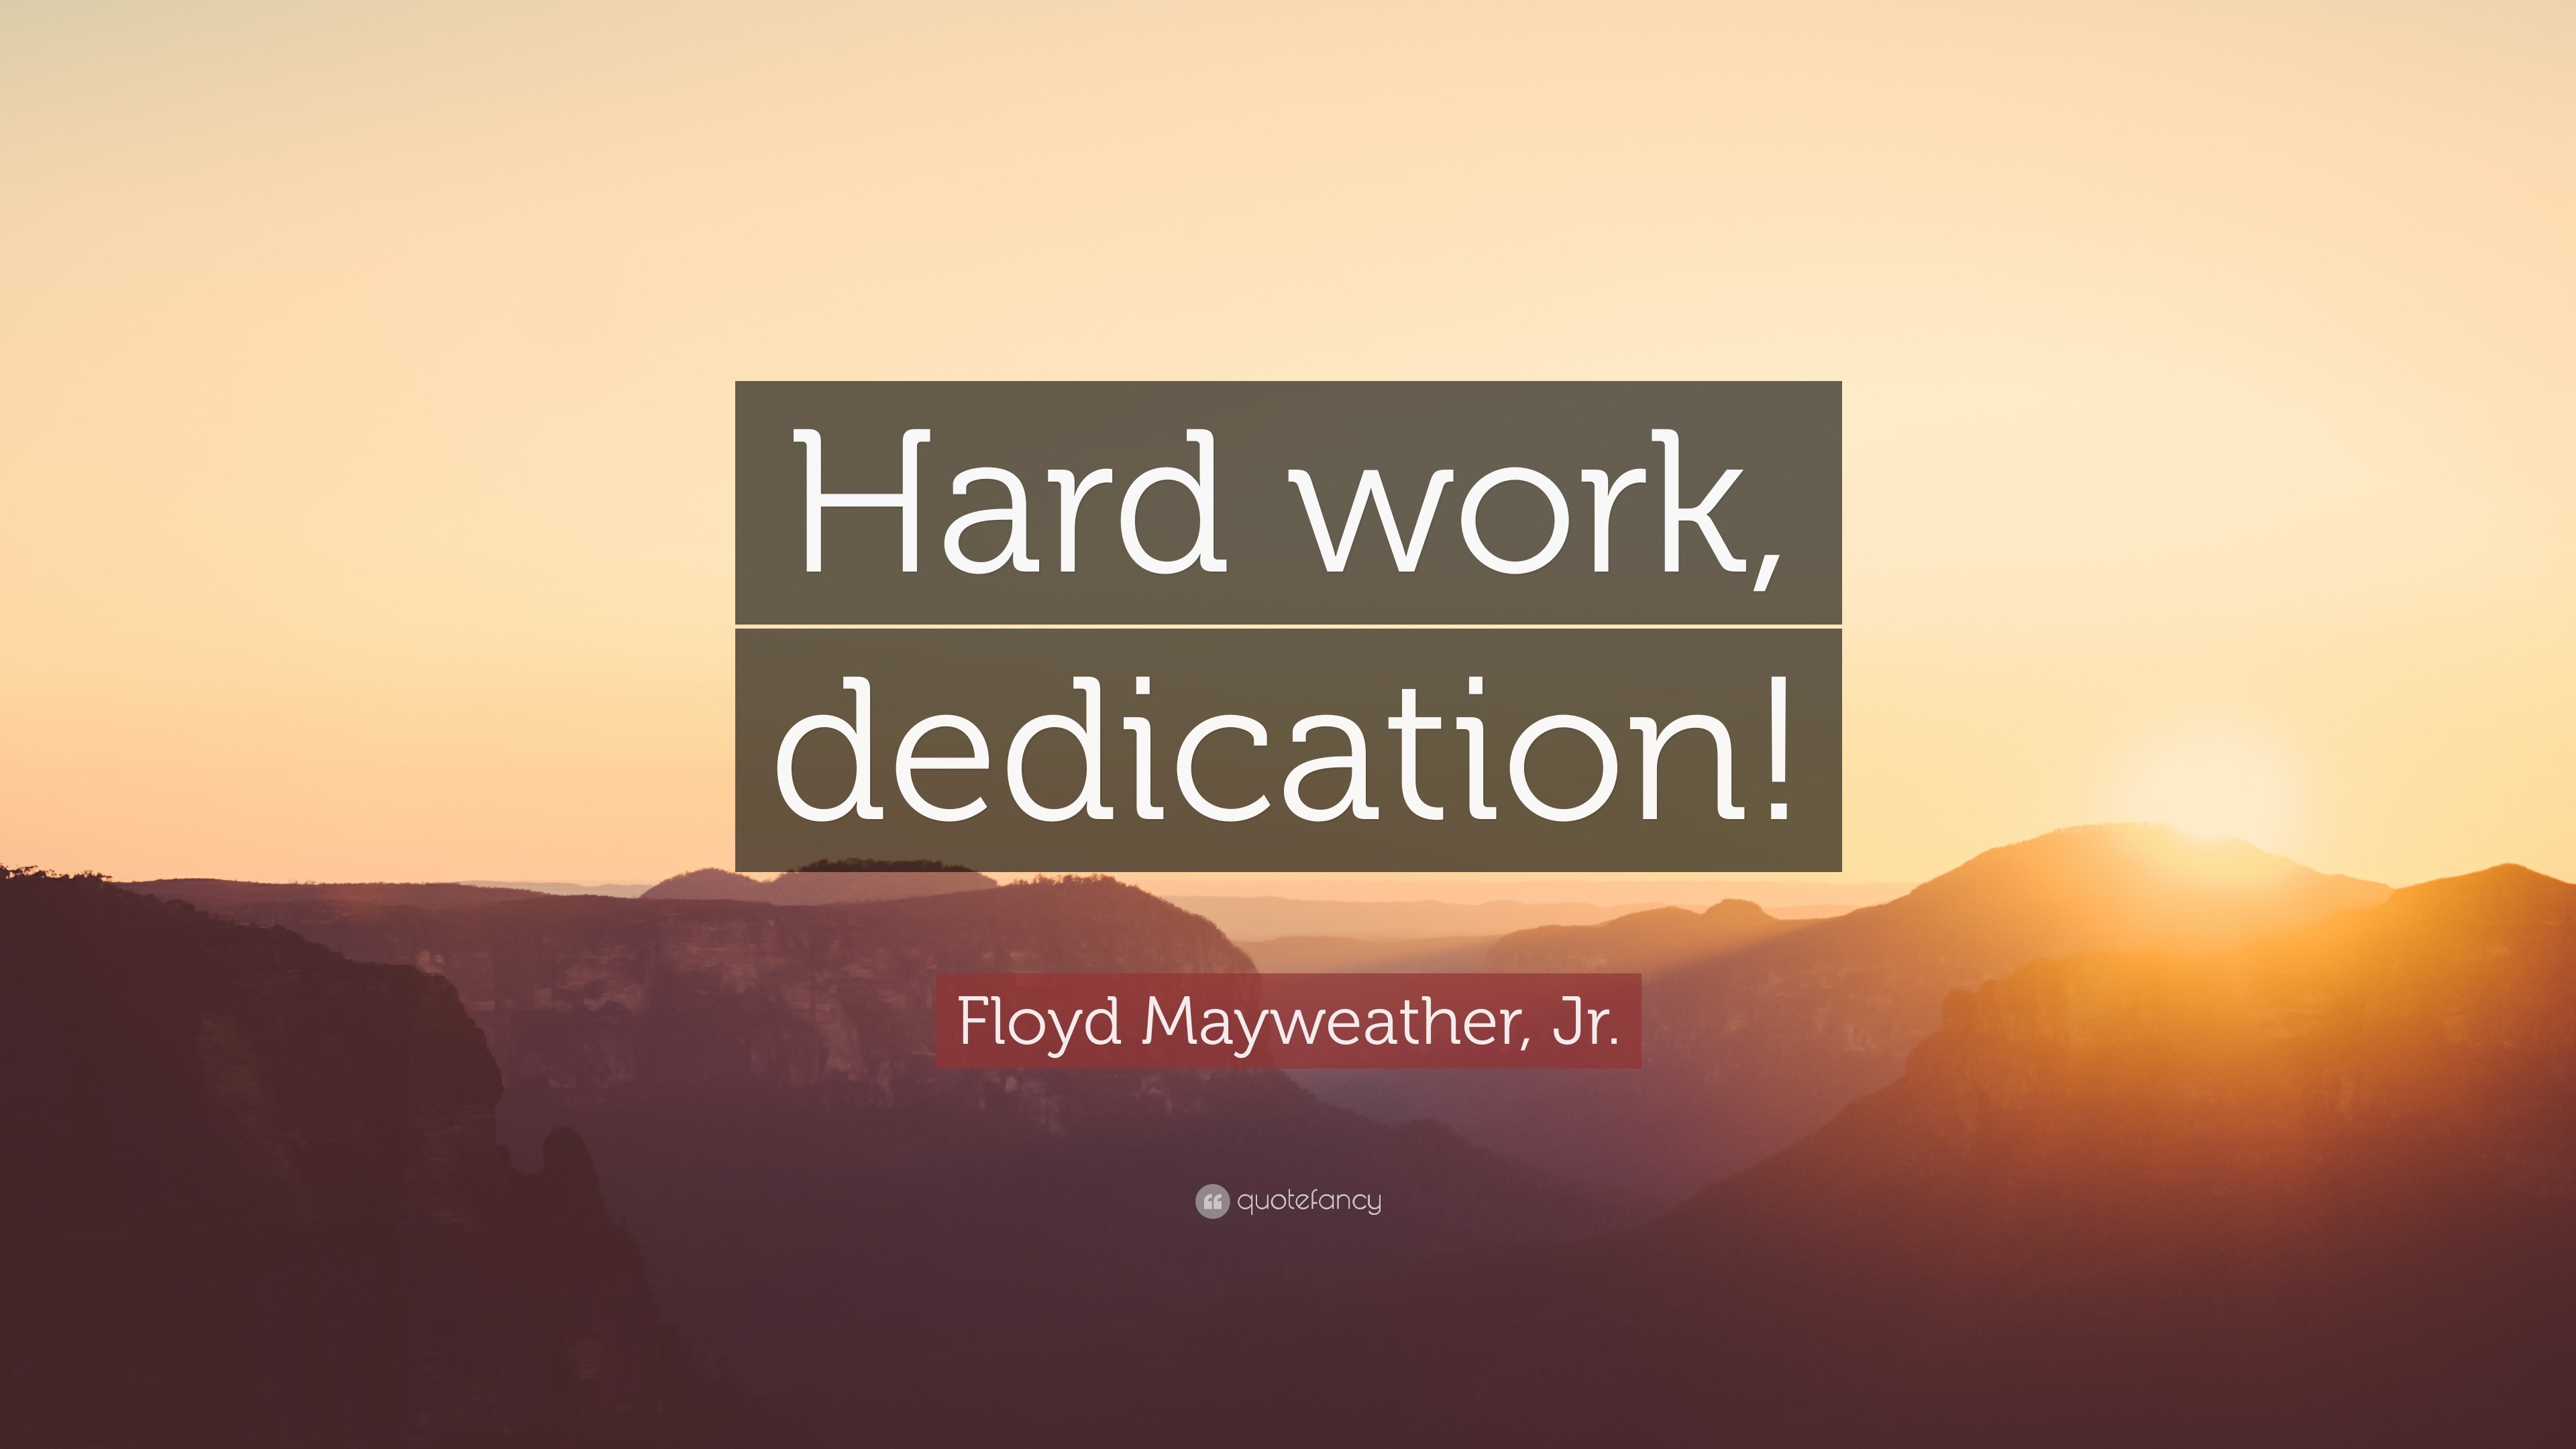 3840x2160 Hard Work Quotes: “Hard work, dedication!” — Floyd Mayweather, Jr